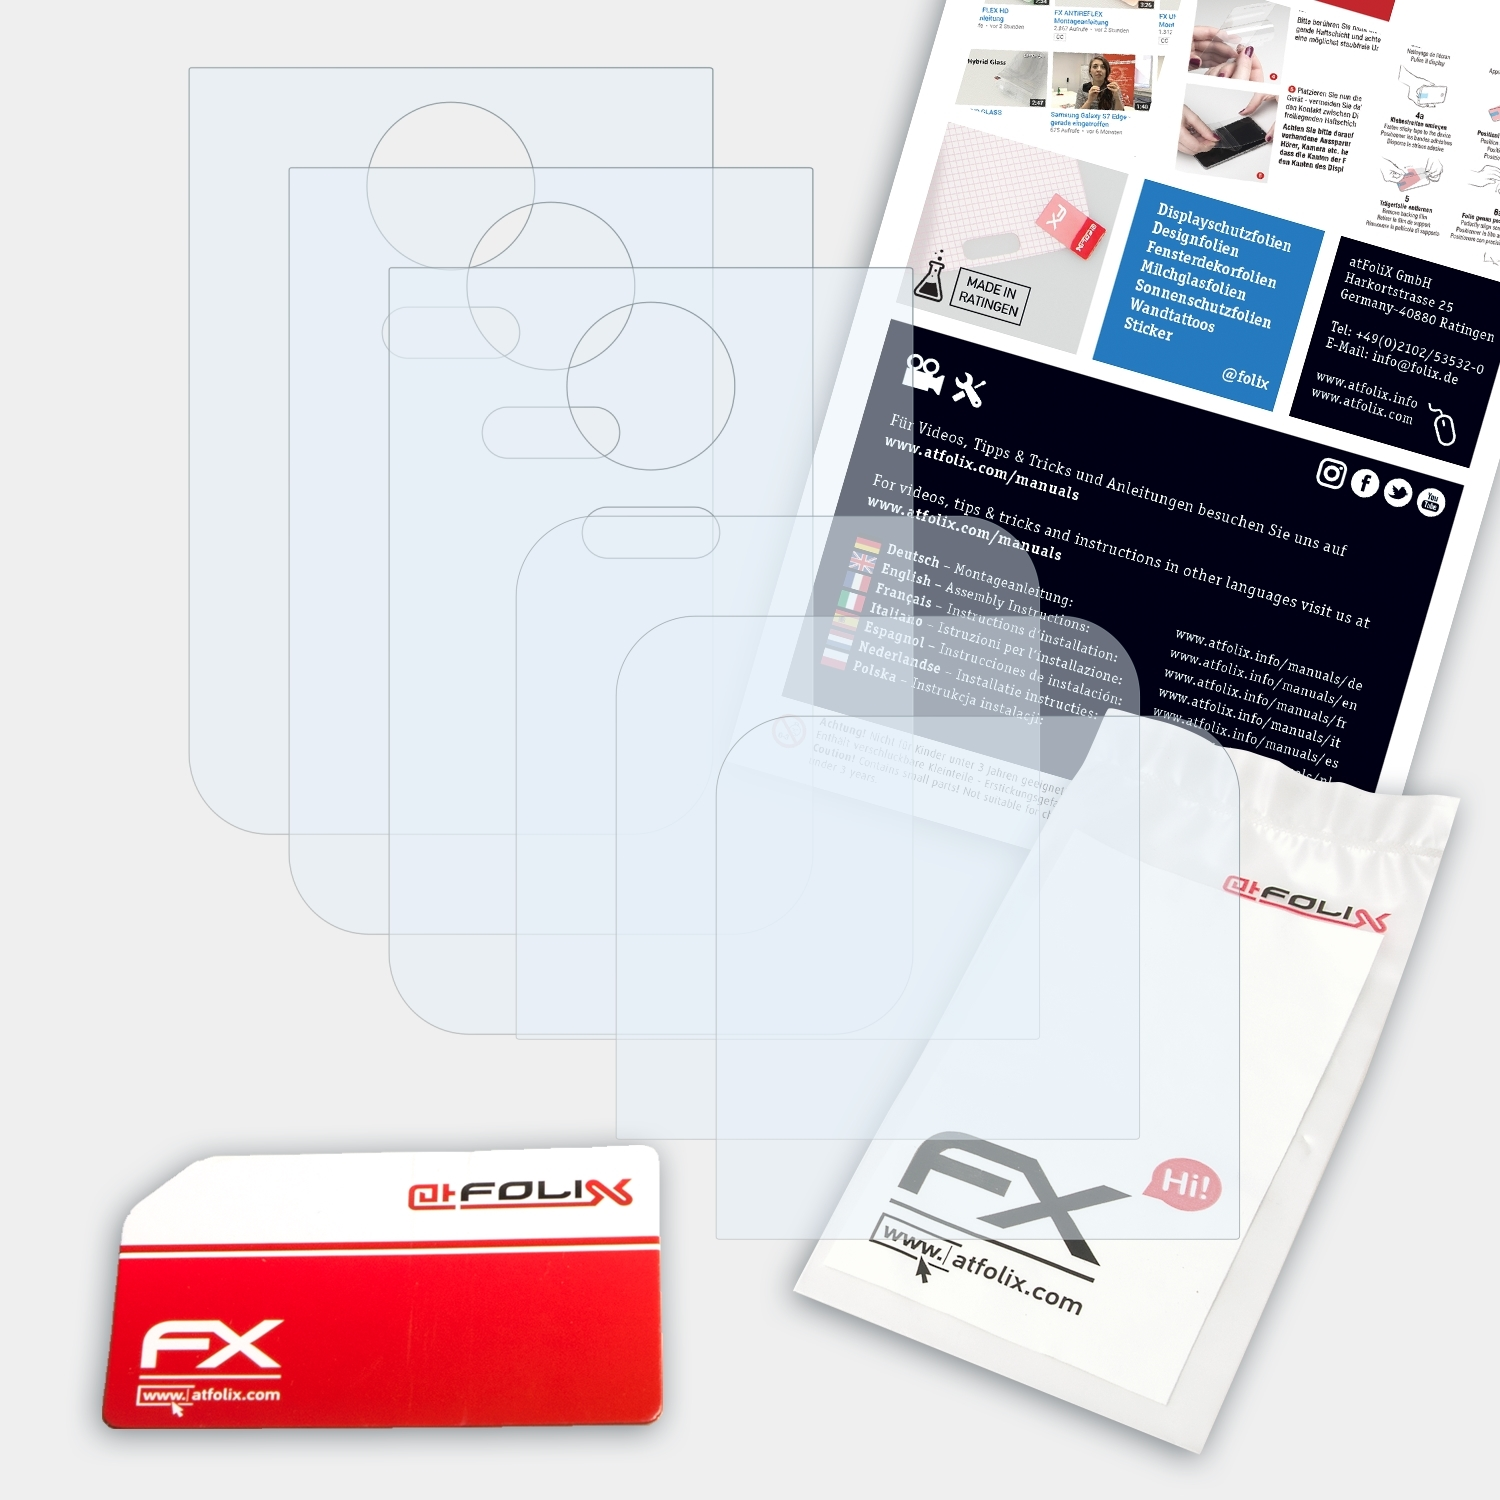 Displayschutz(für 3x PLAYFULL) ATFOLIX FX-Clear Kodak